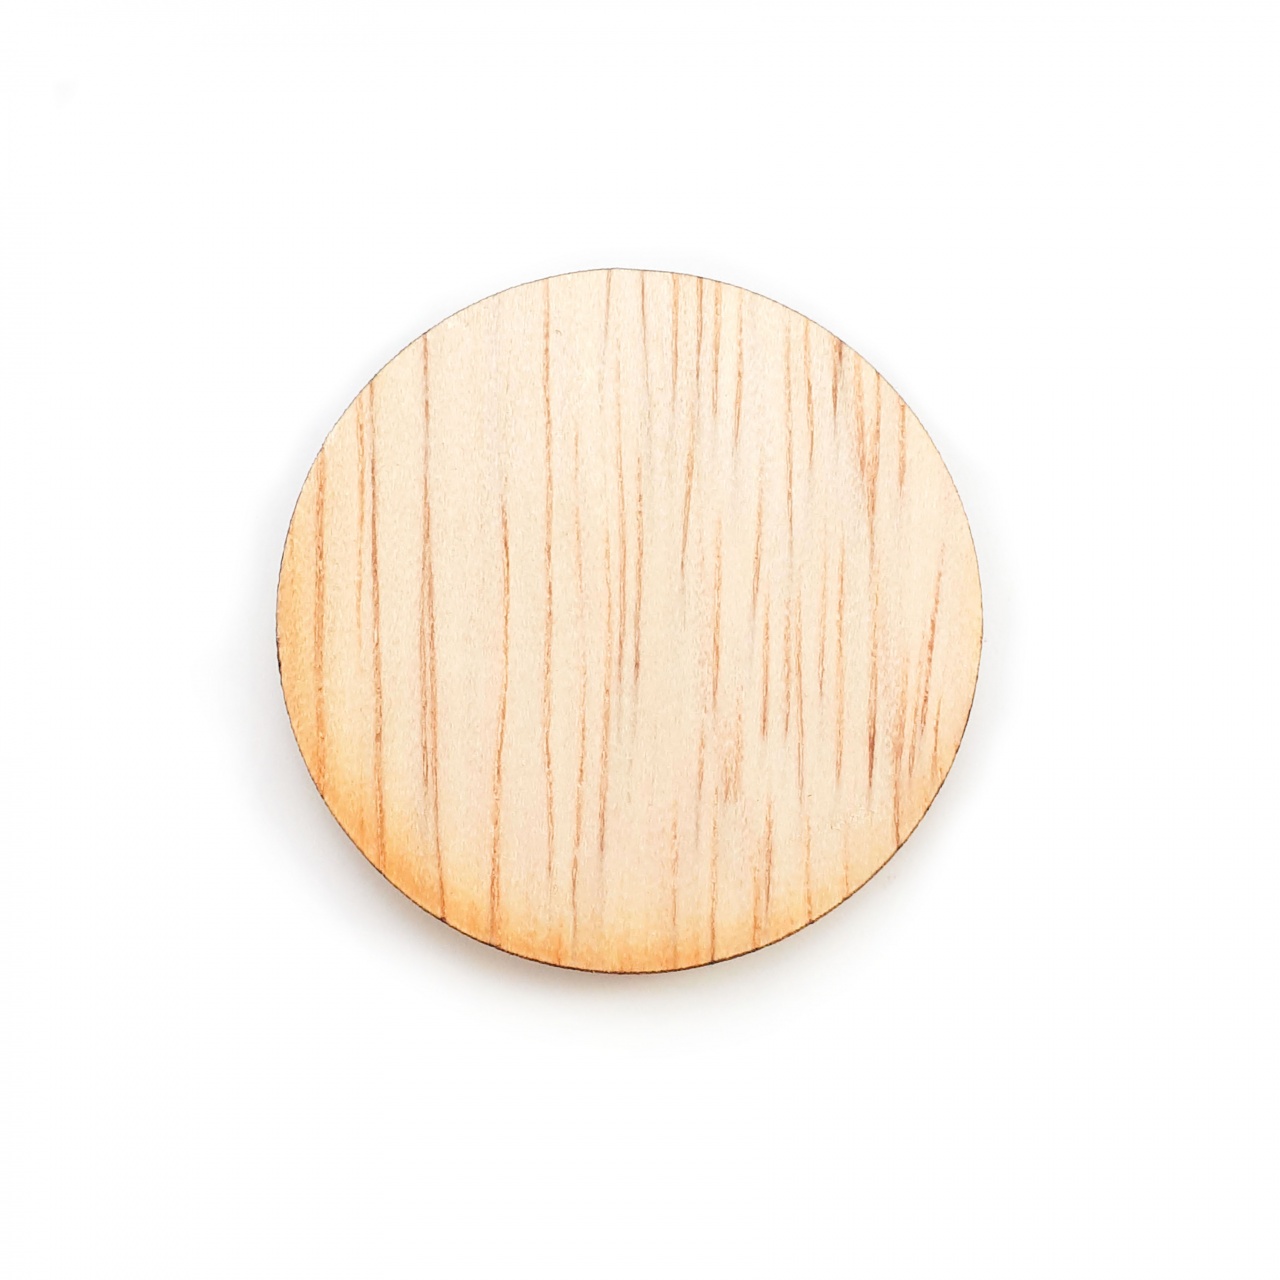 Bază rotundă 4 cm, placaj lemn :: Ø4 cm